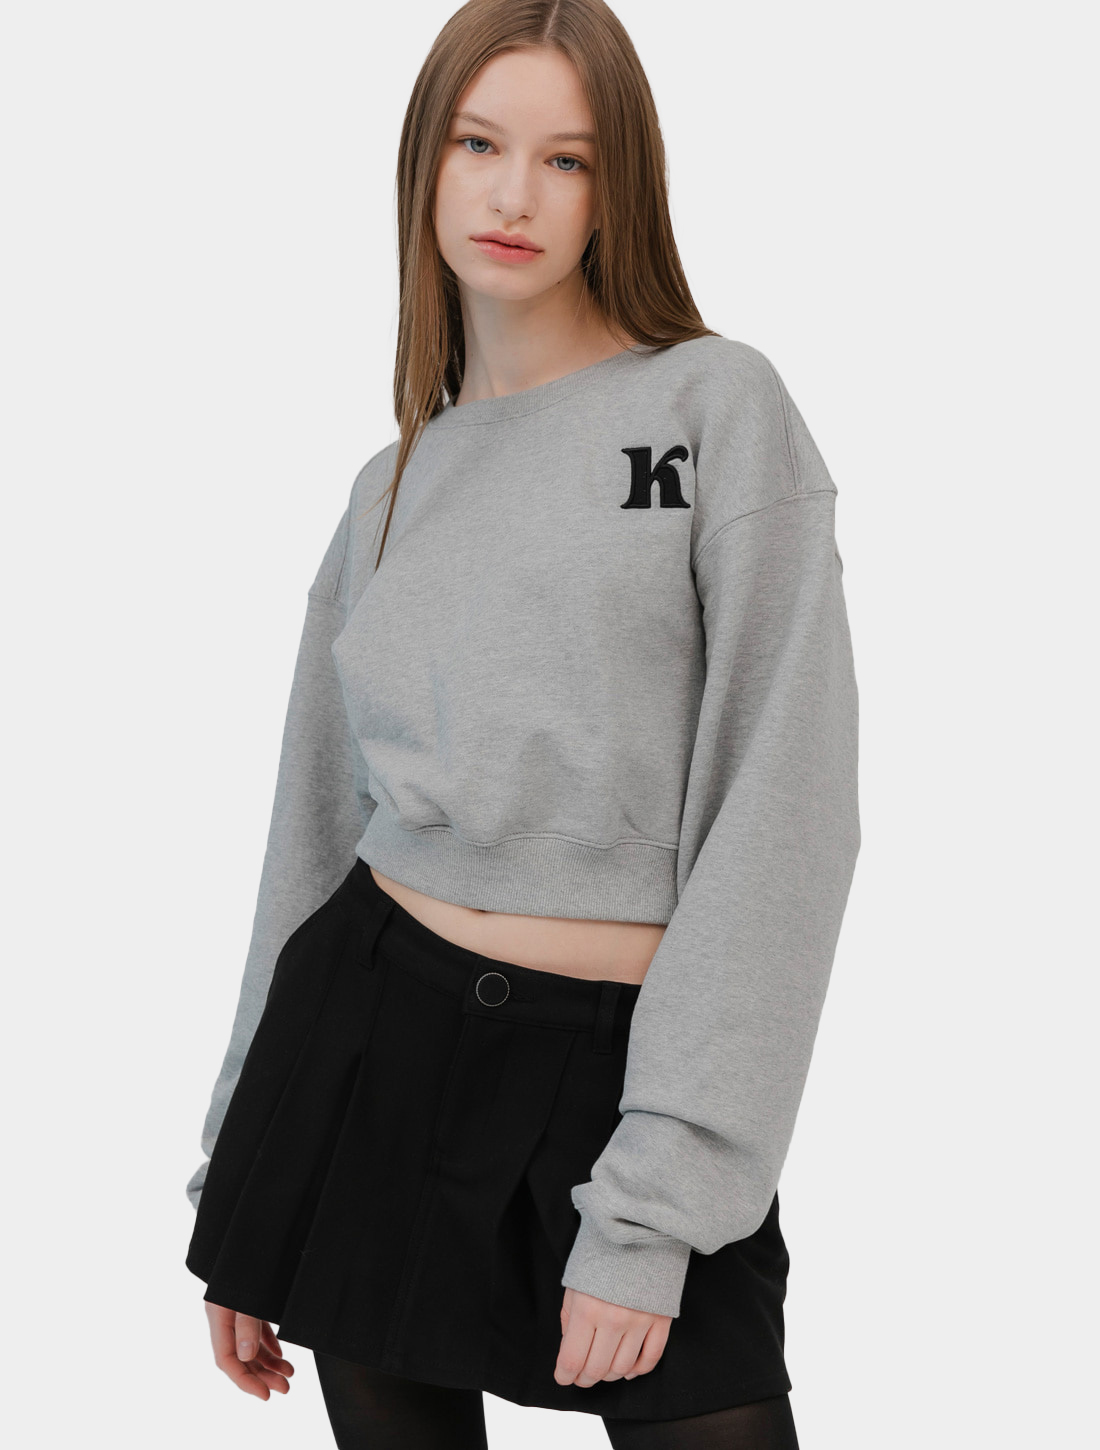 Odd cropped Sweatshirt (gray)